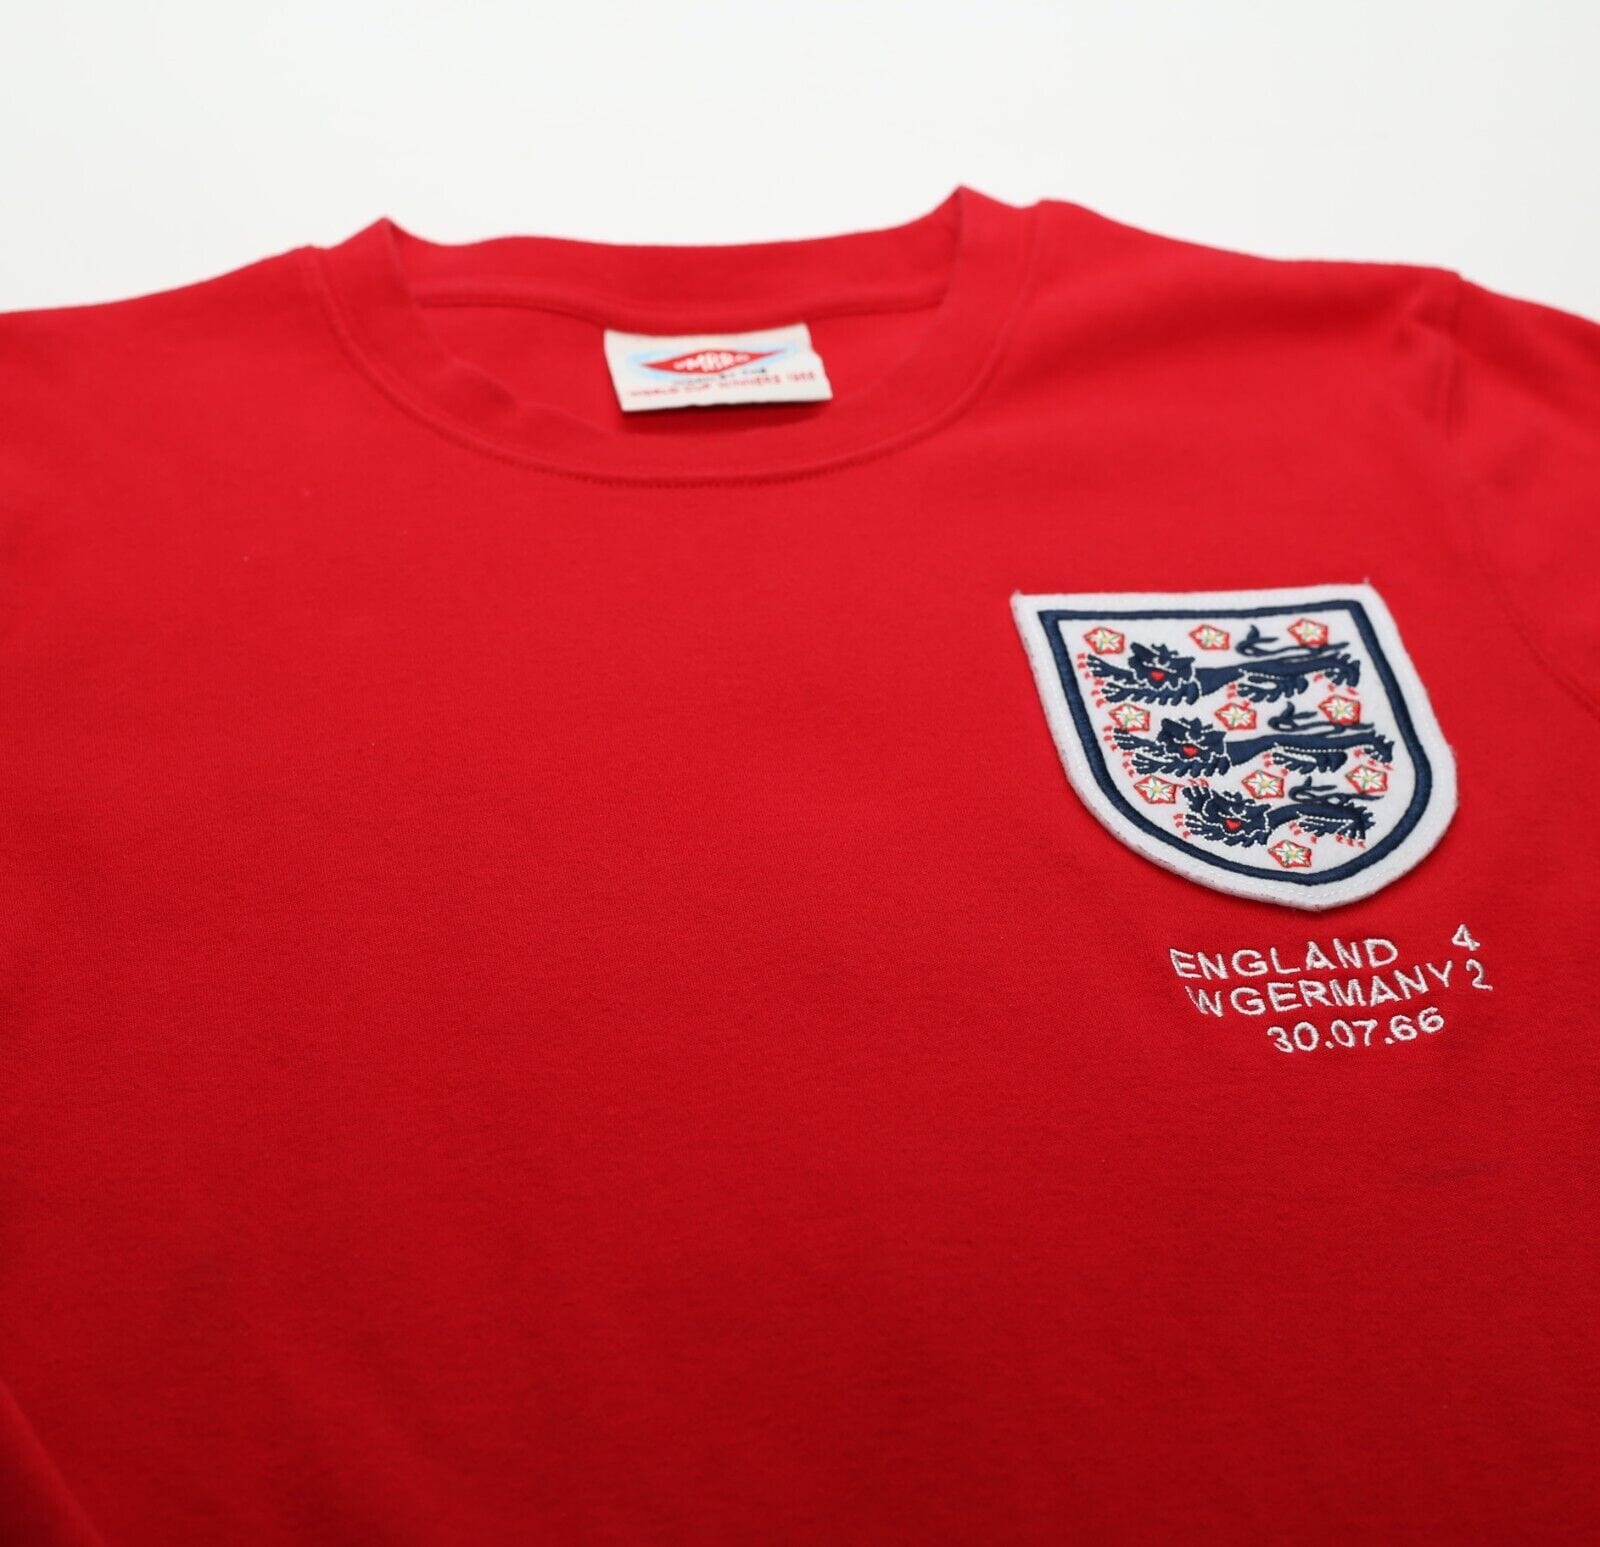 1966 Bobby MOORE #6 England Vintage Umbro Away LS Football Shirt (M) West Ham